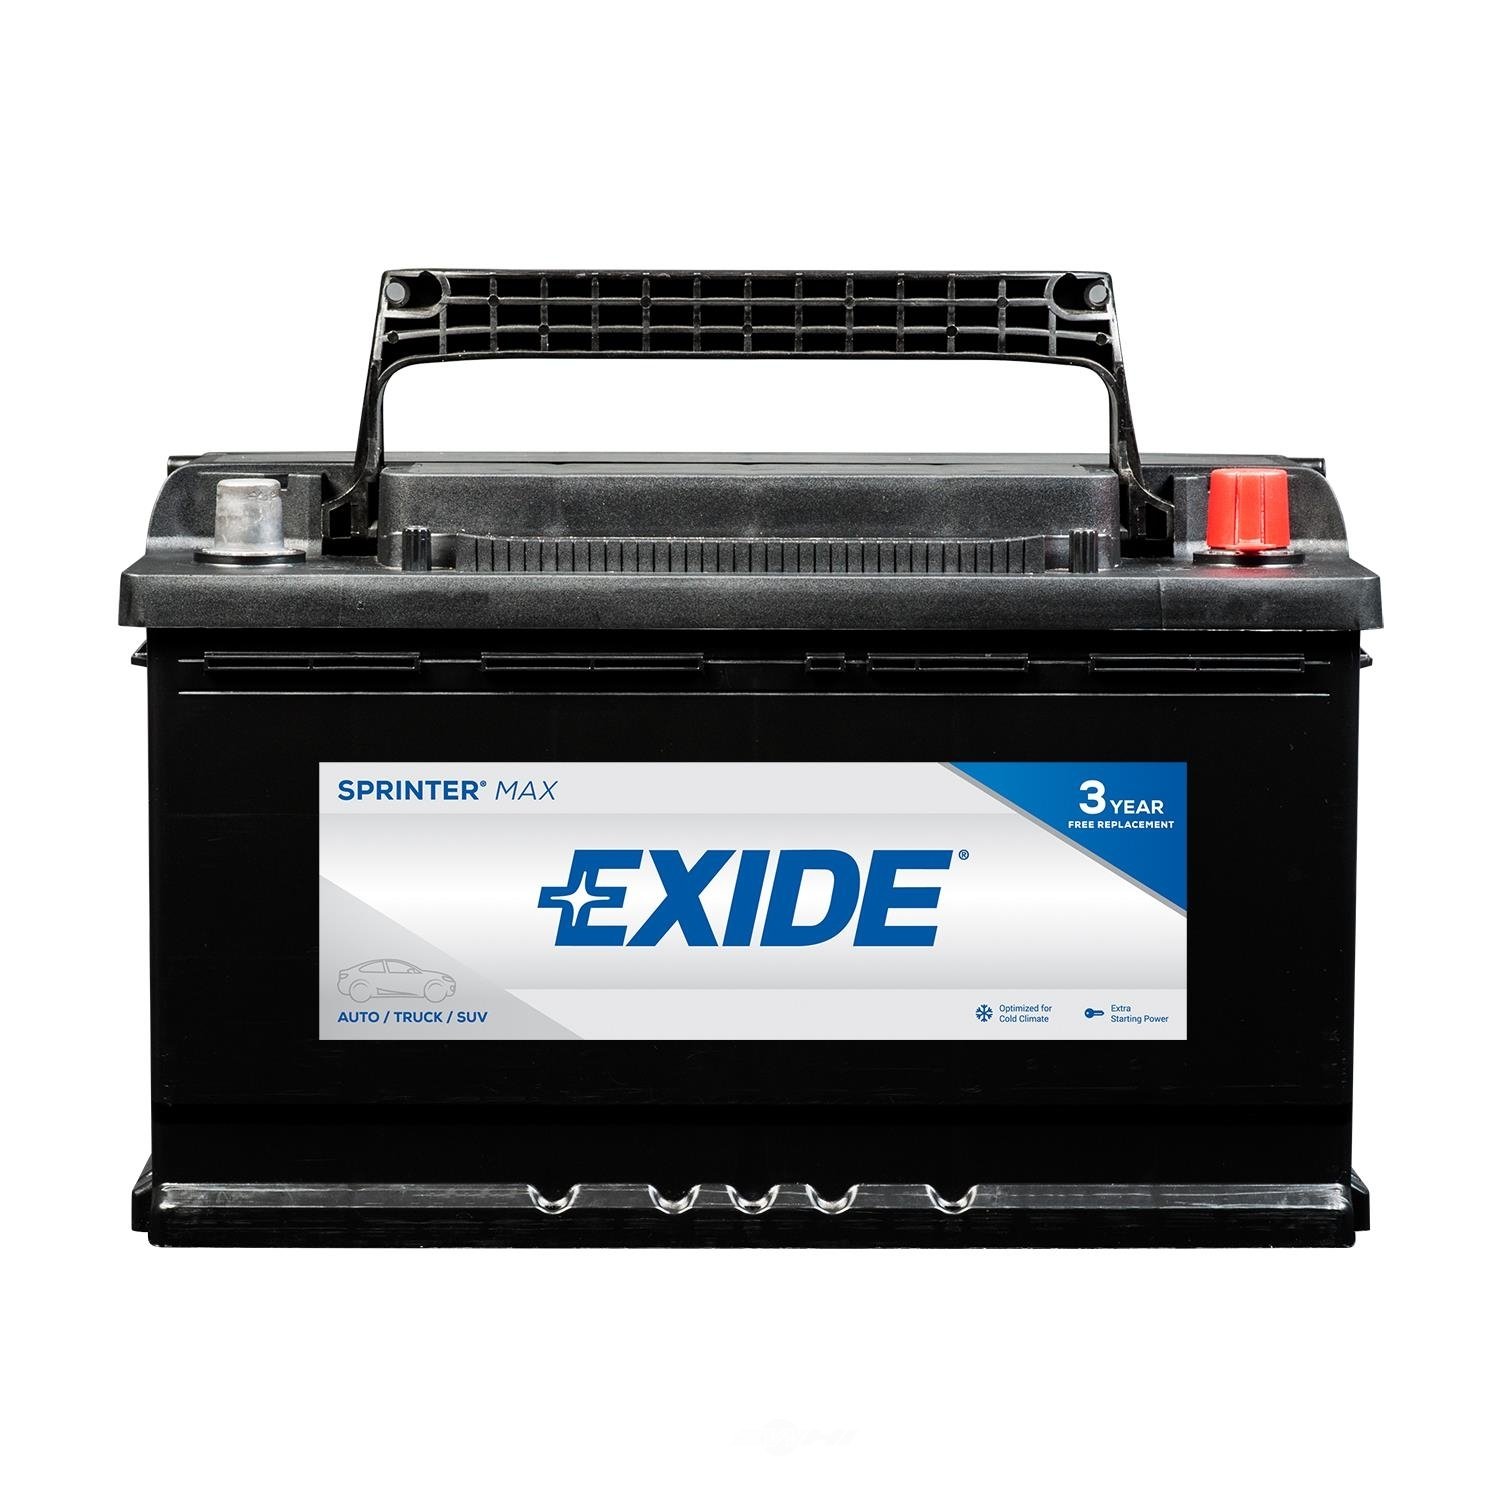 EXIDE BATTERIES - SPRINTER MAX - CCA: 800 - EX1 SX-H7/L4/94R